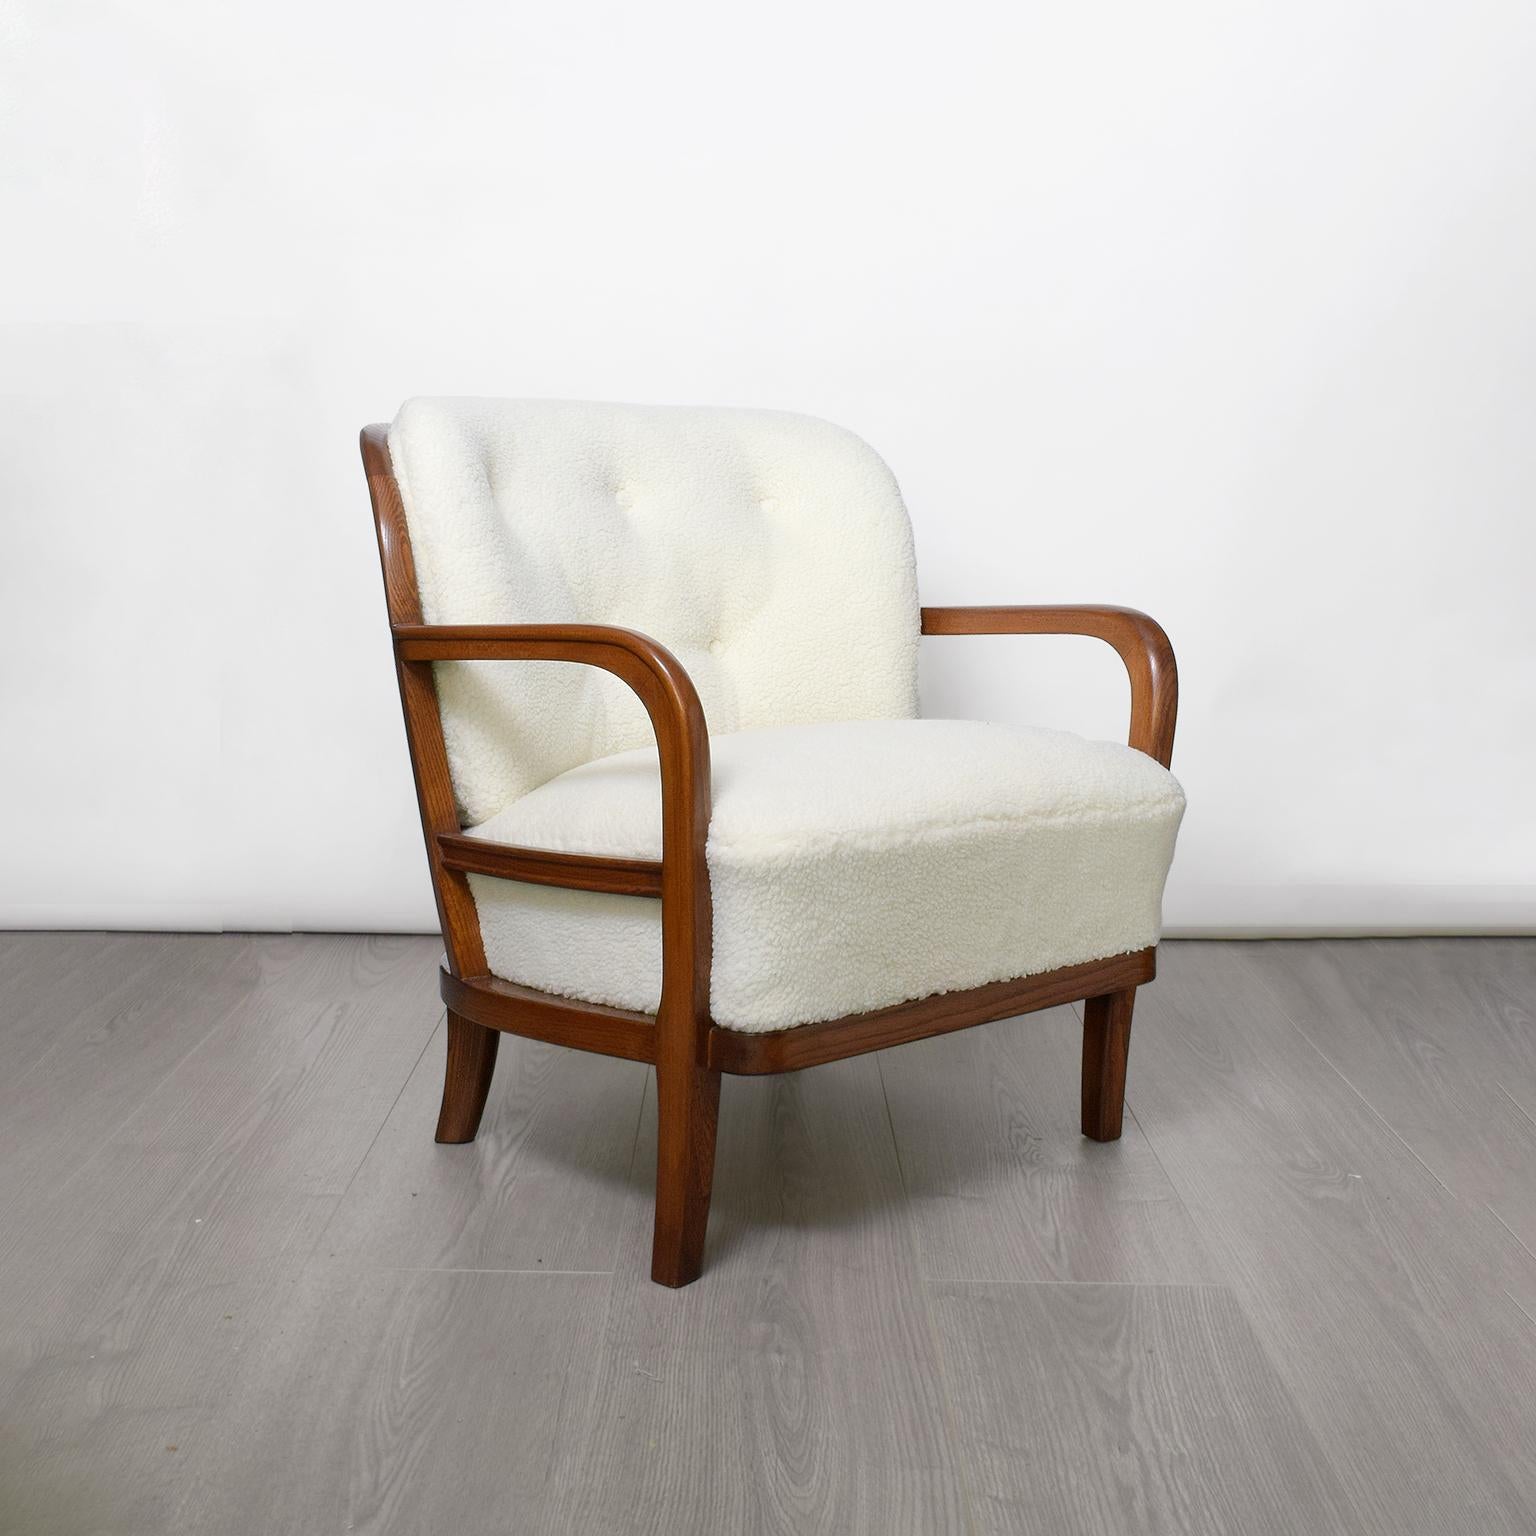 Carved Pair of Scandinavian Modern Lounge Chairs by Carl-Johan Boman, Boman OY, Finland